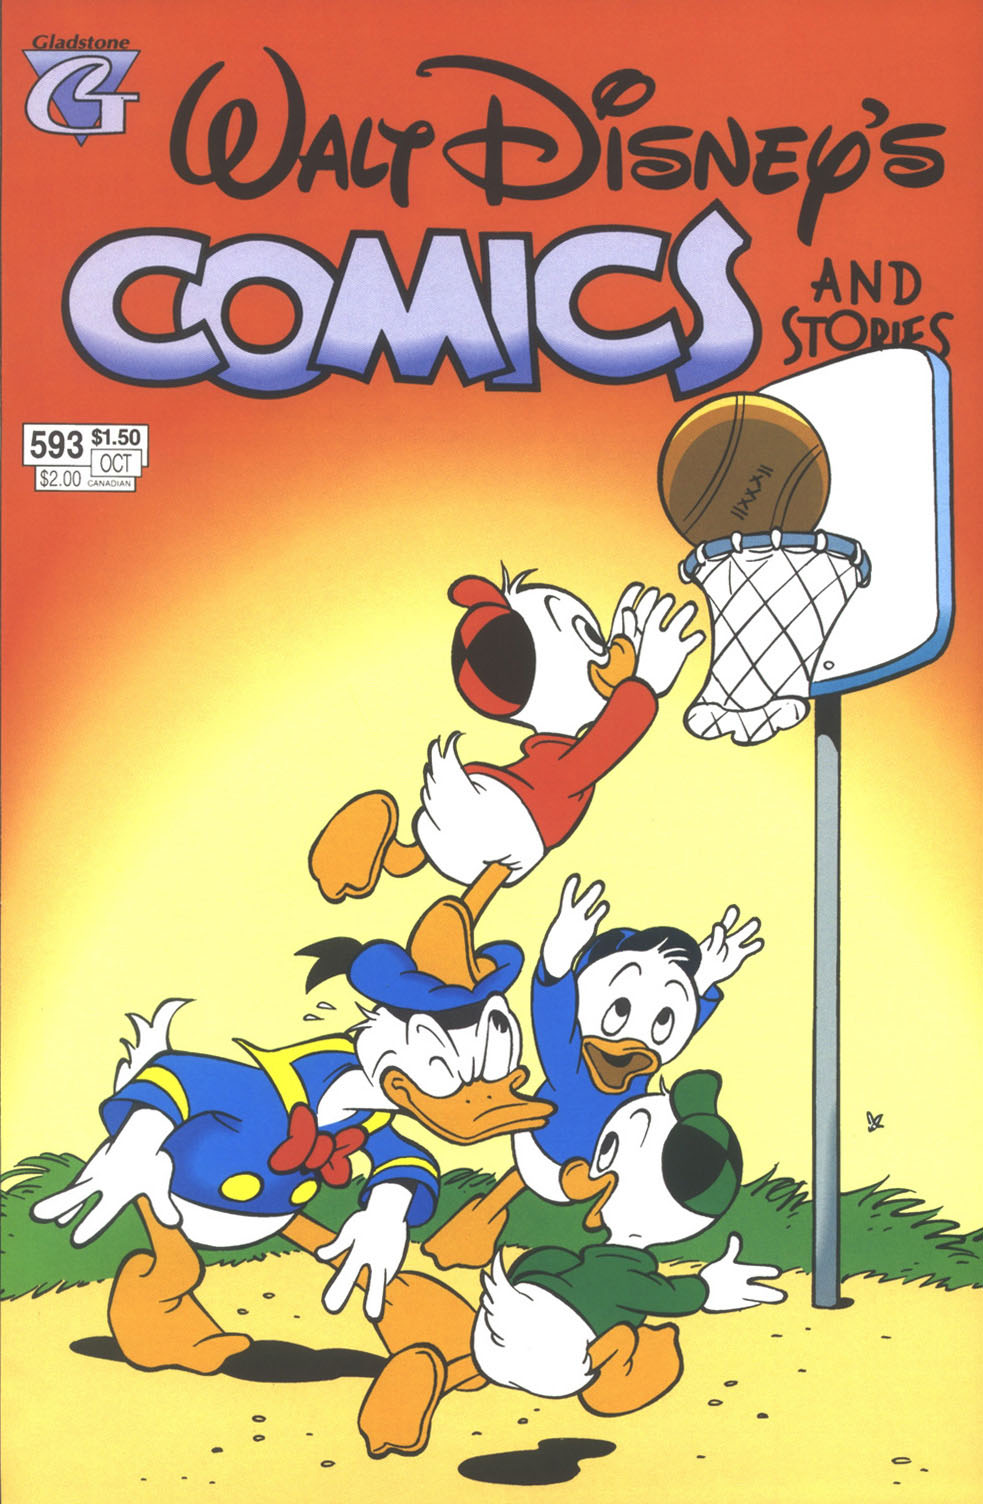 Walt Disneys Comics and Stories 593 Page 1